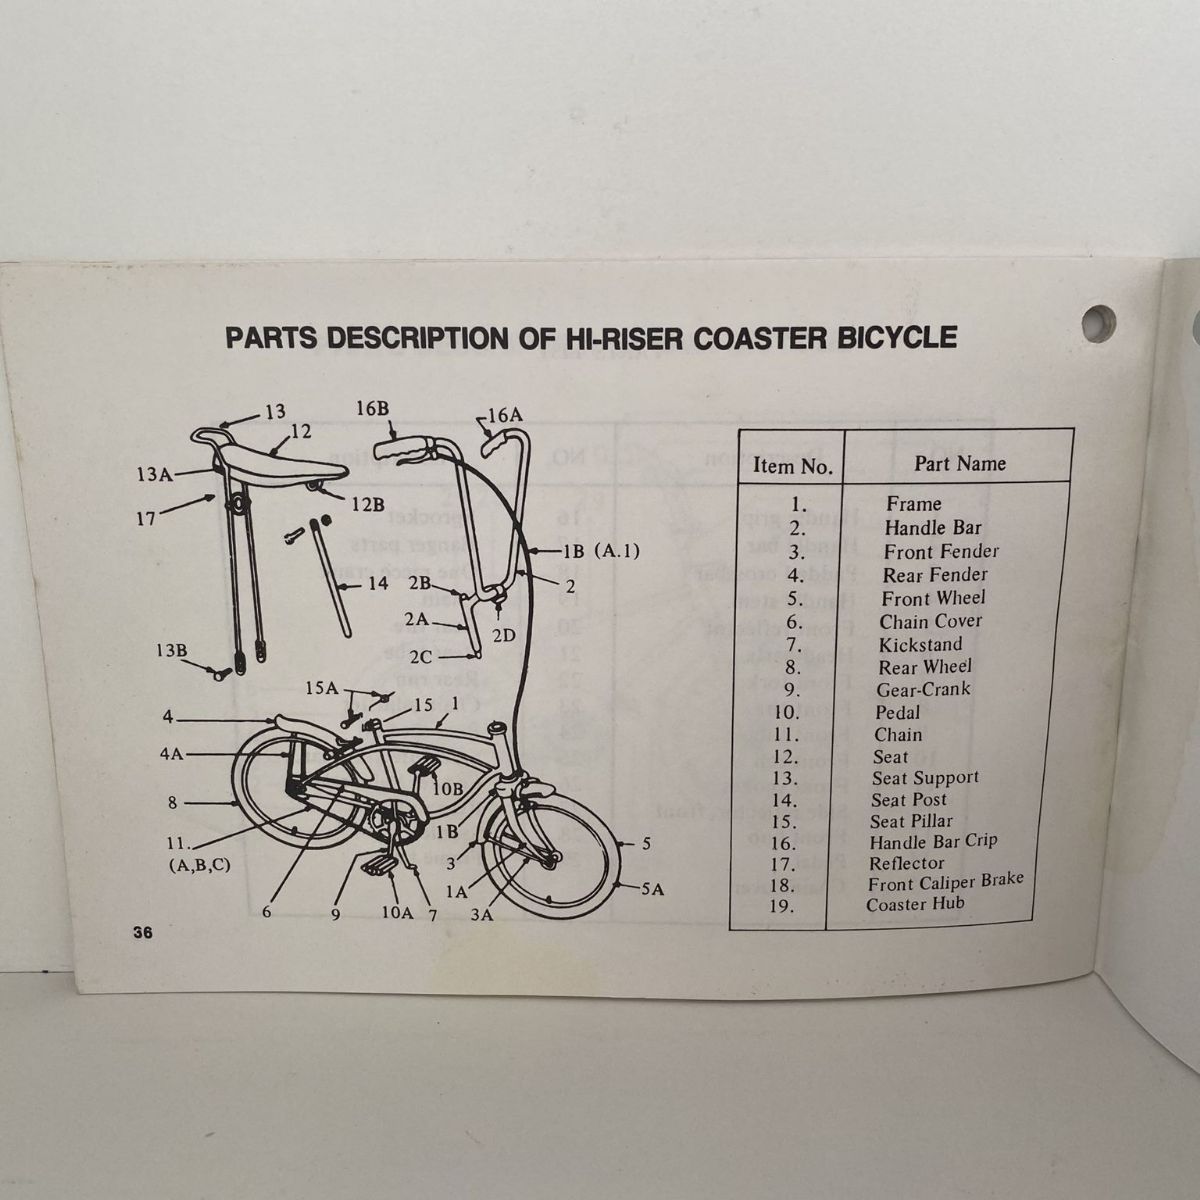 10 Speed Bicycle Manual